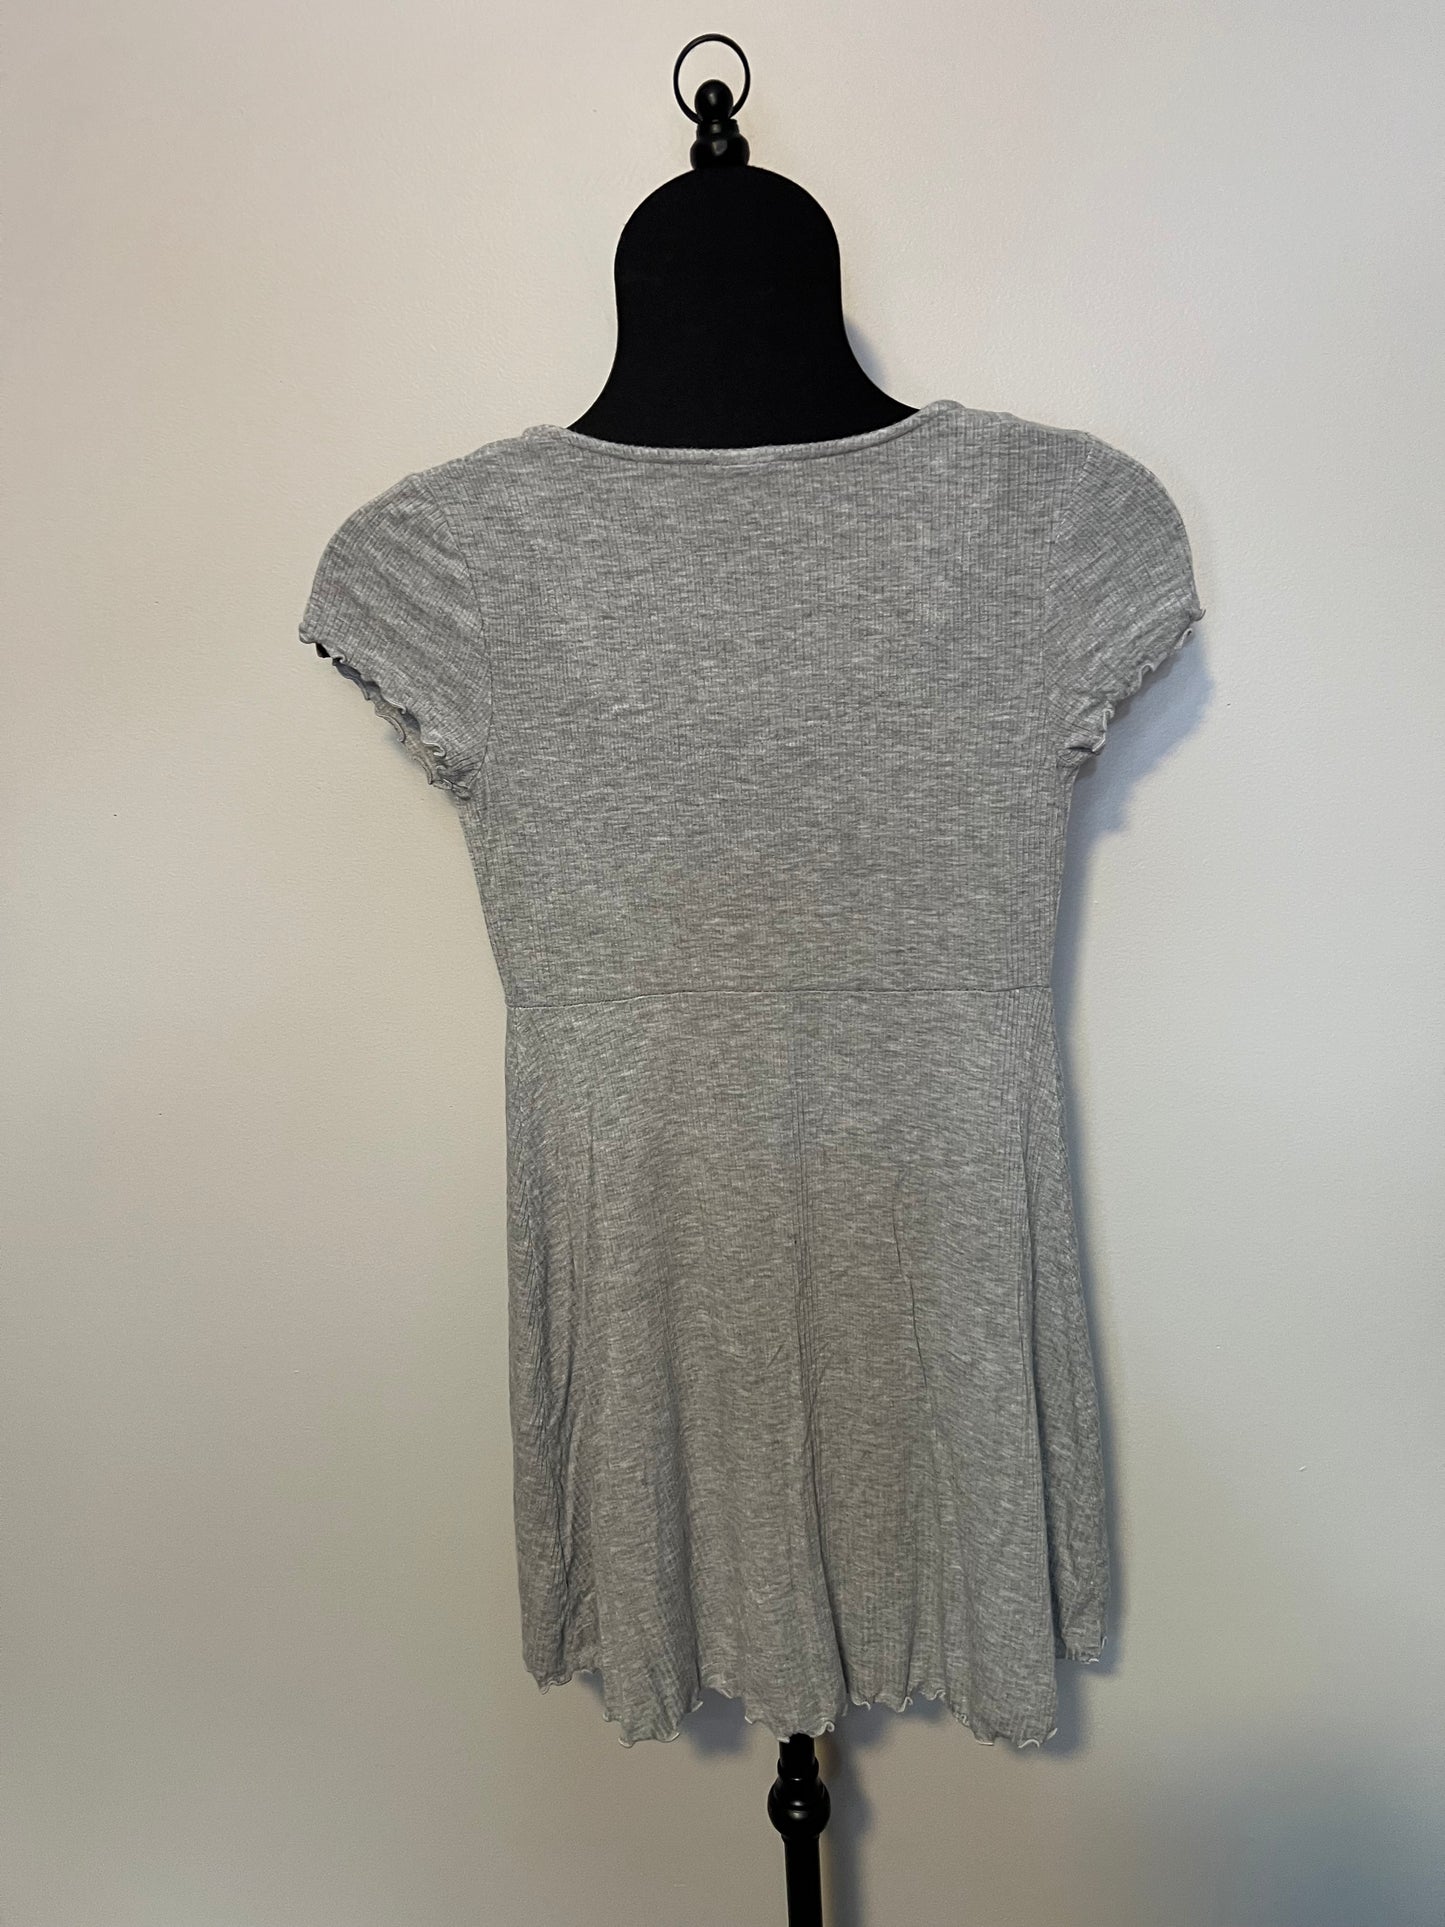 Girls Large (10/12) - Gray Dress -VGUC - price reduced